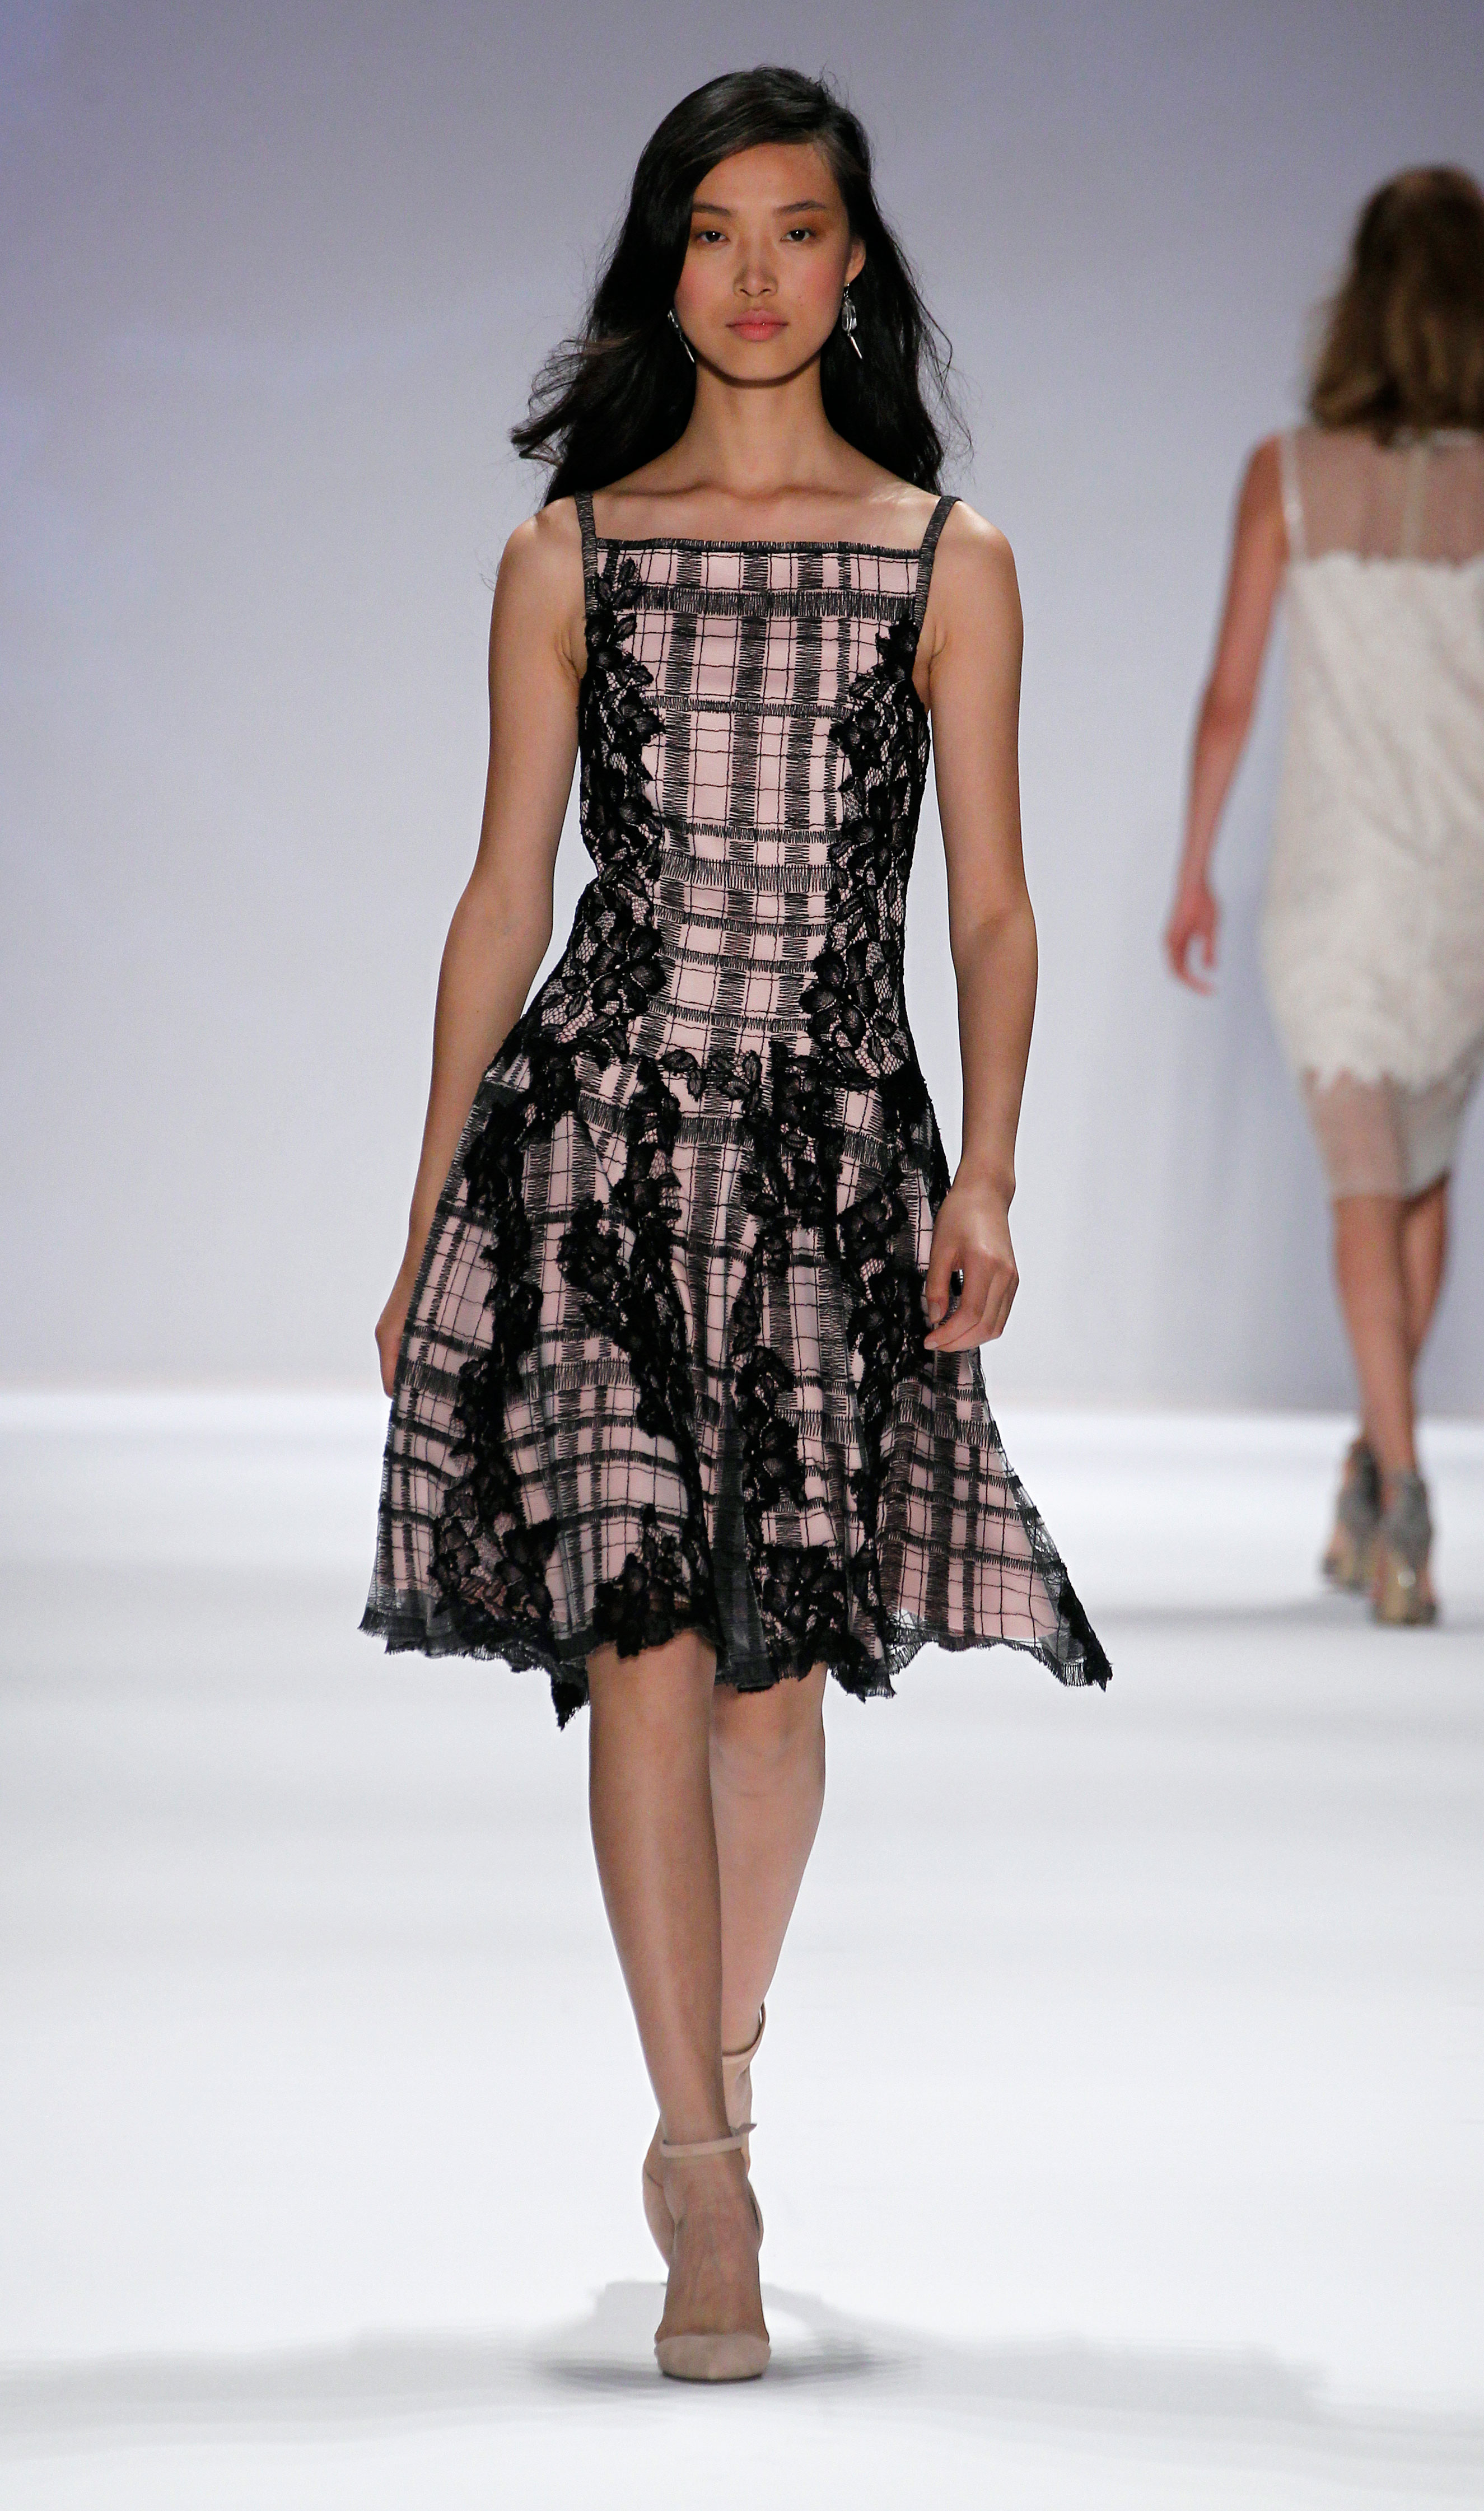 NY Fashion Week S14: Tadashi Shoji | California Apparel News